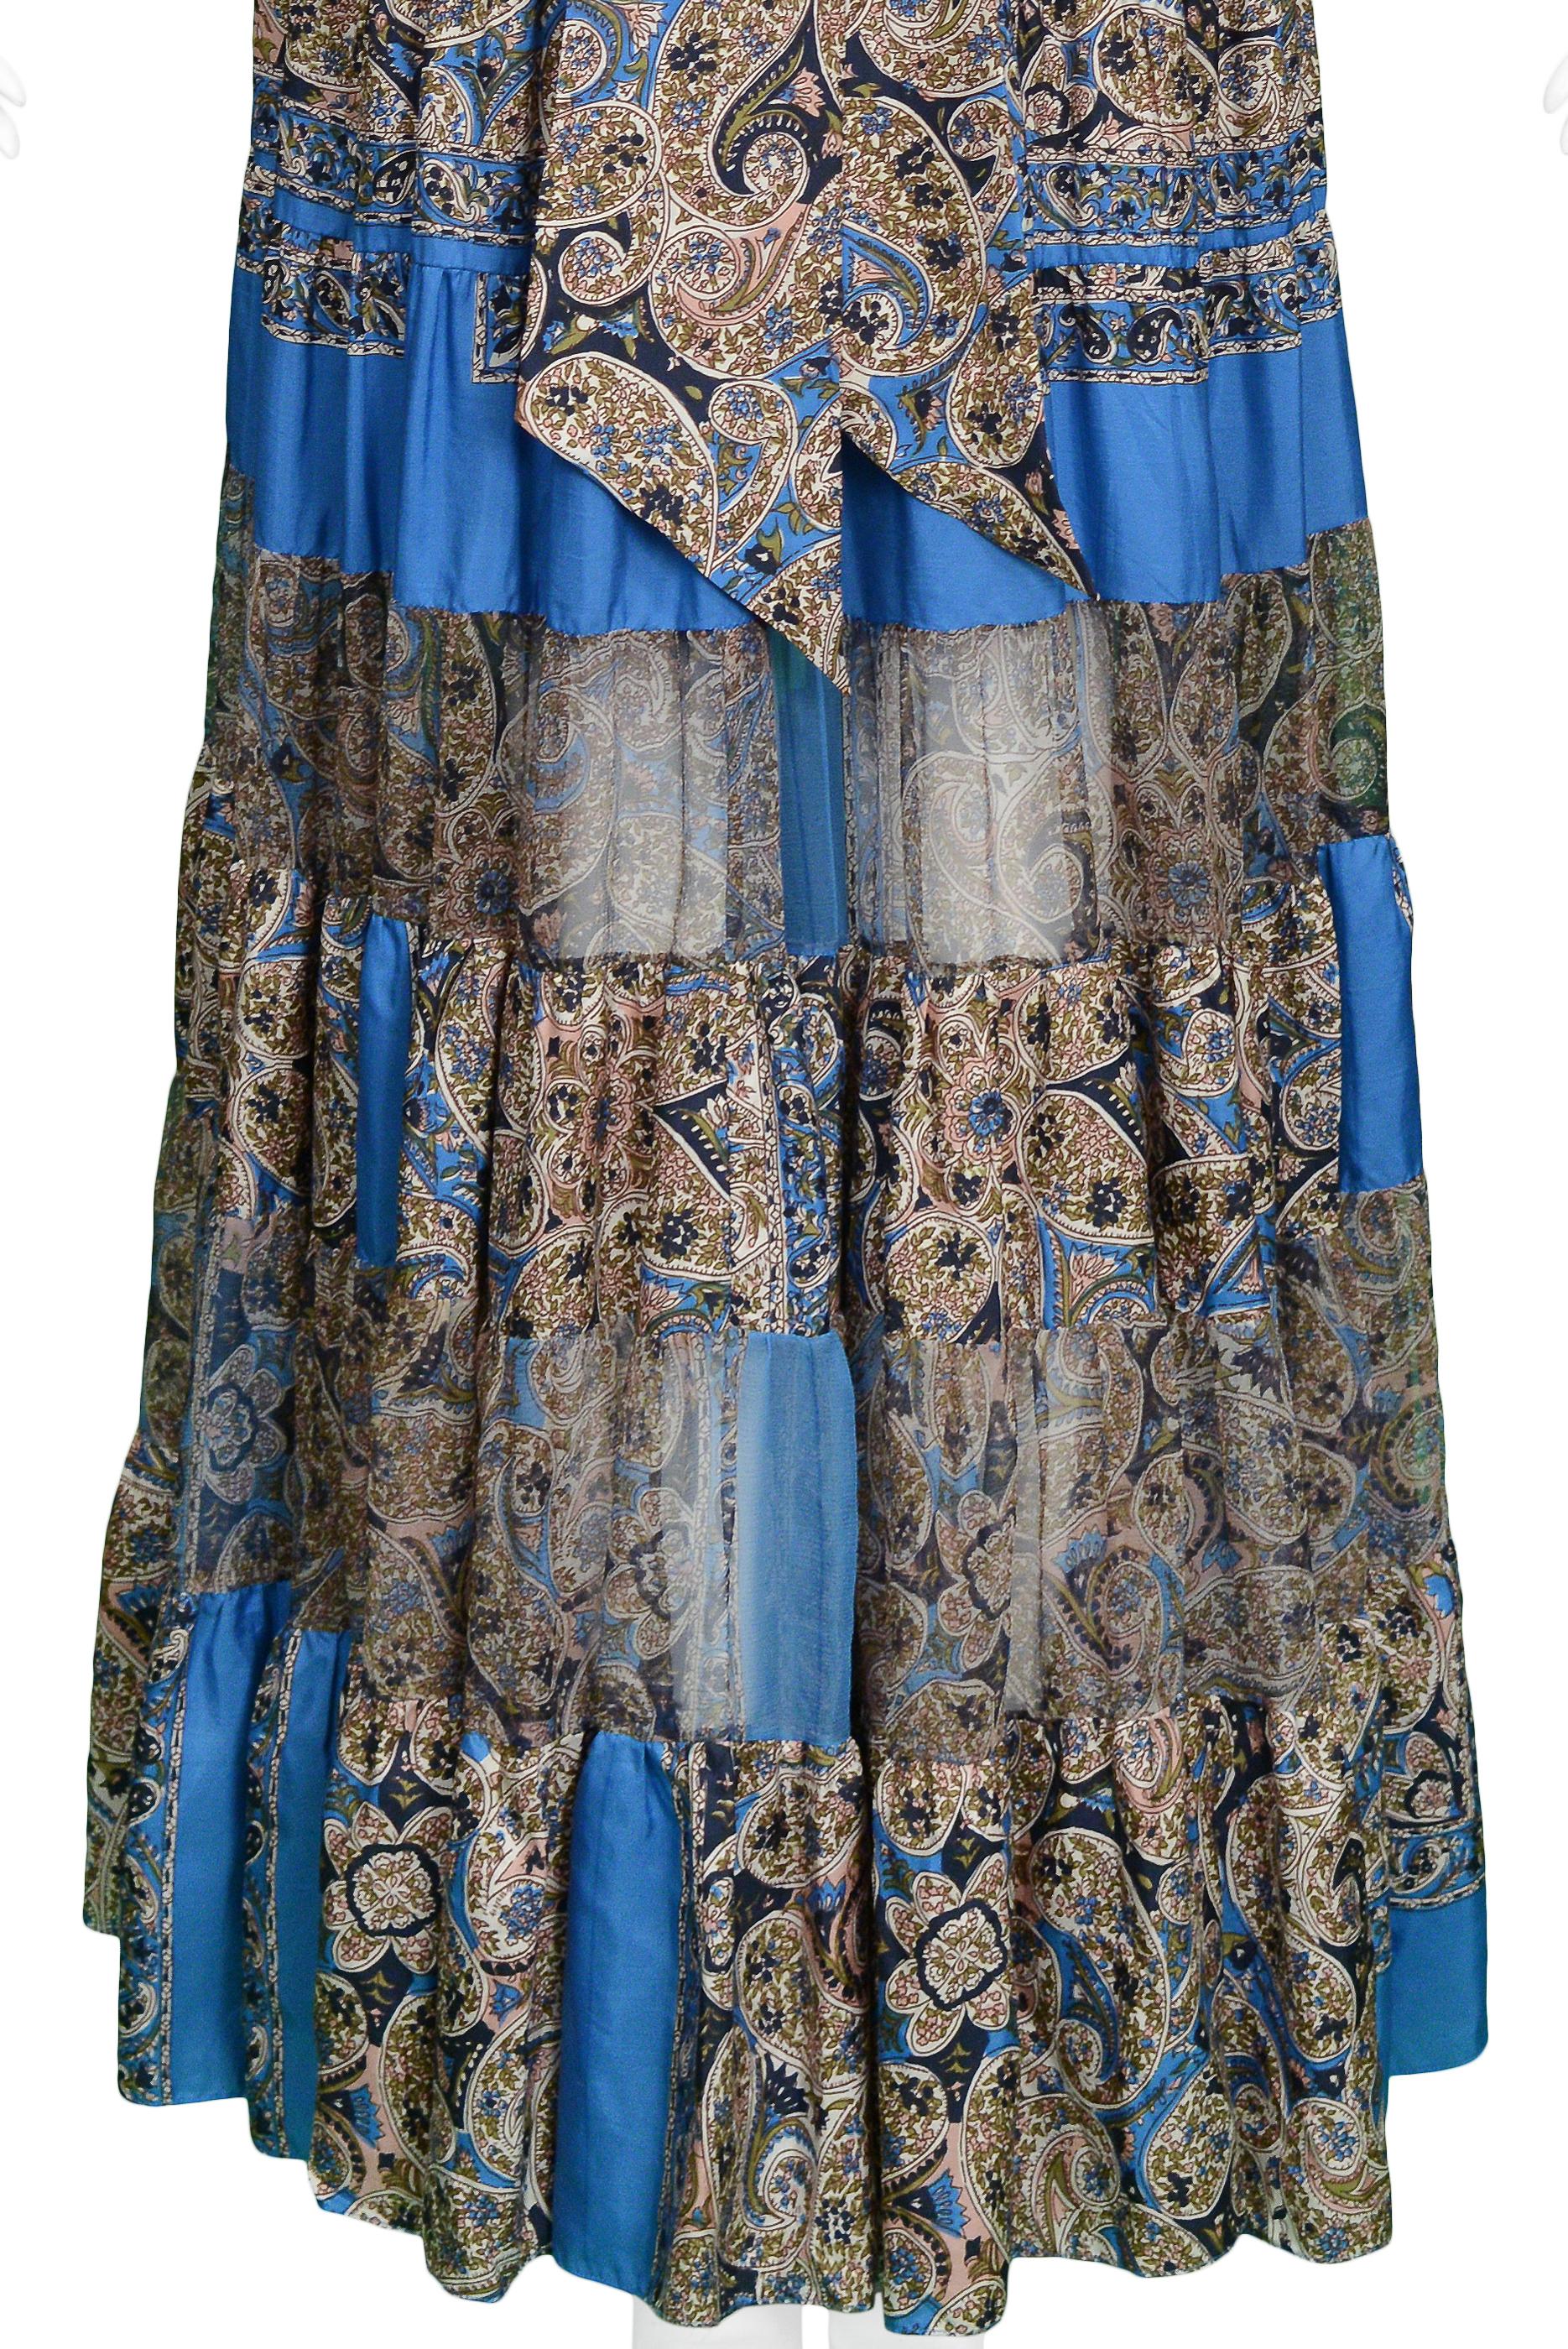 Vintage Balenciaga By Ghesquiere Blue & Paisley Patchwork Maxi Dress 2005 1